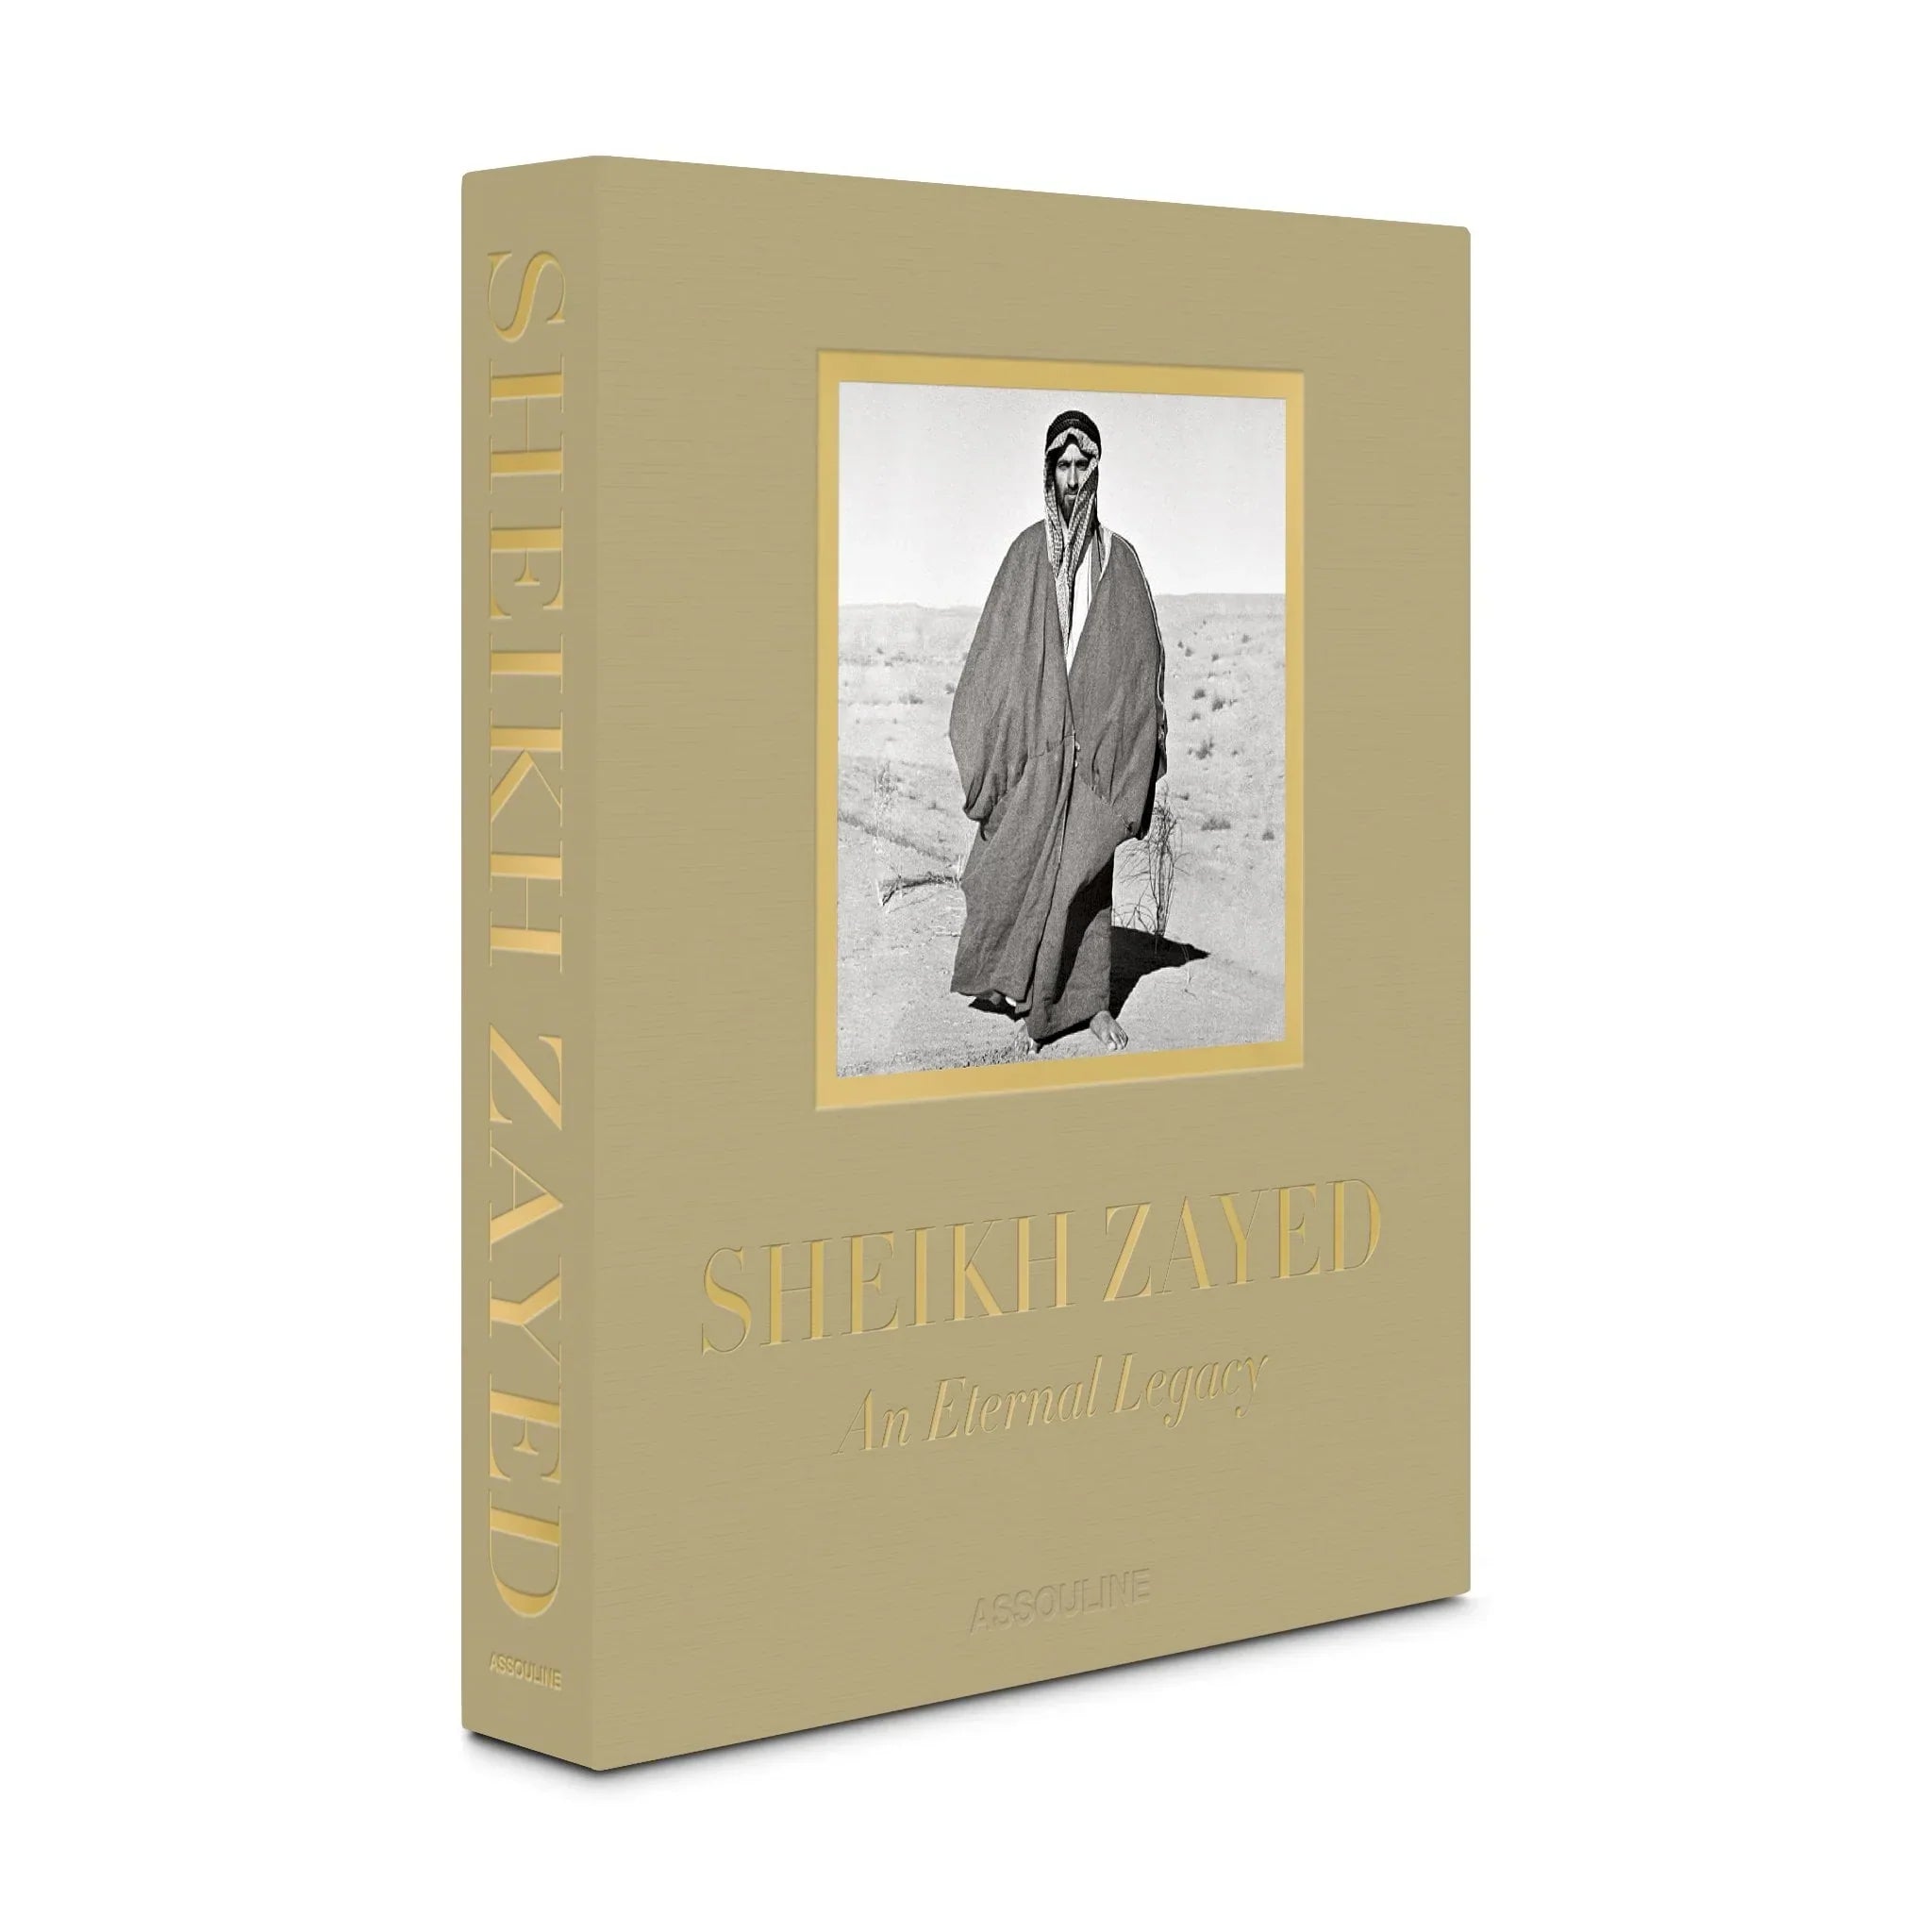 sheikh zayed: an eternal legacy 17